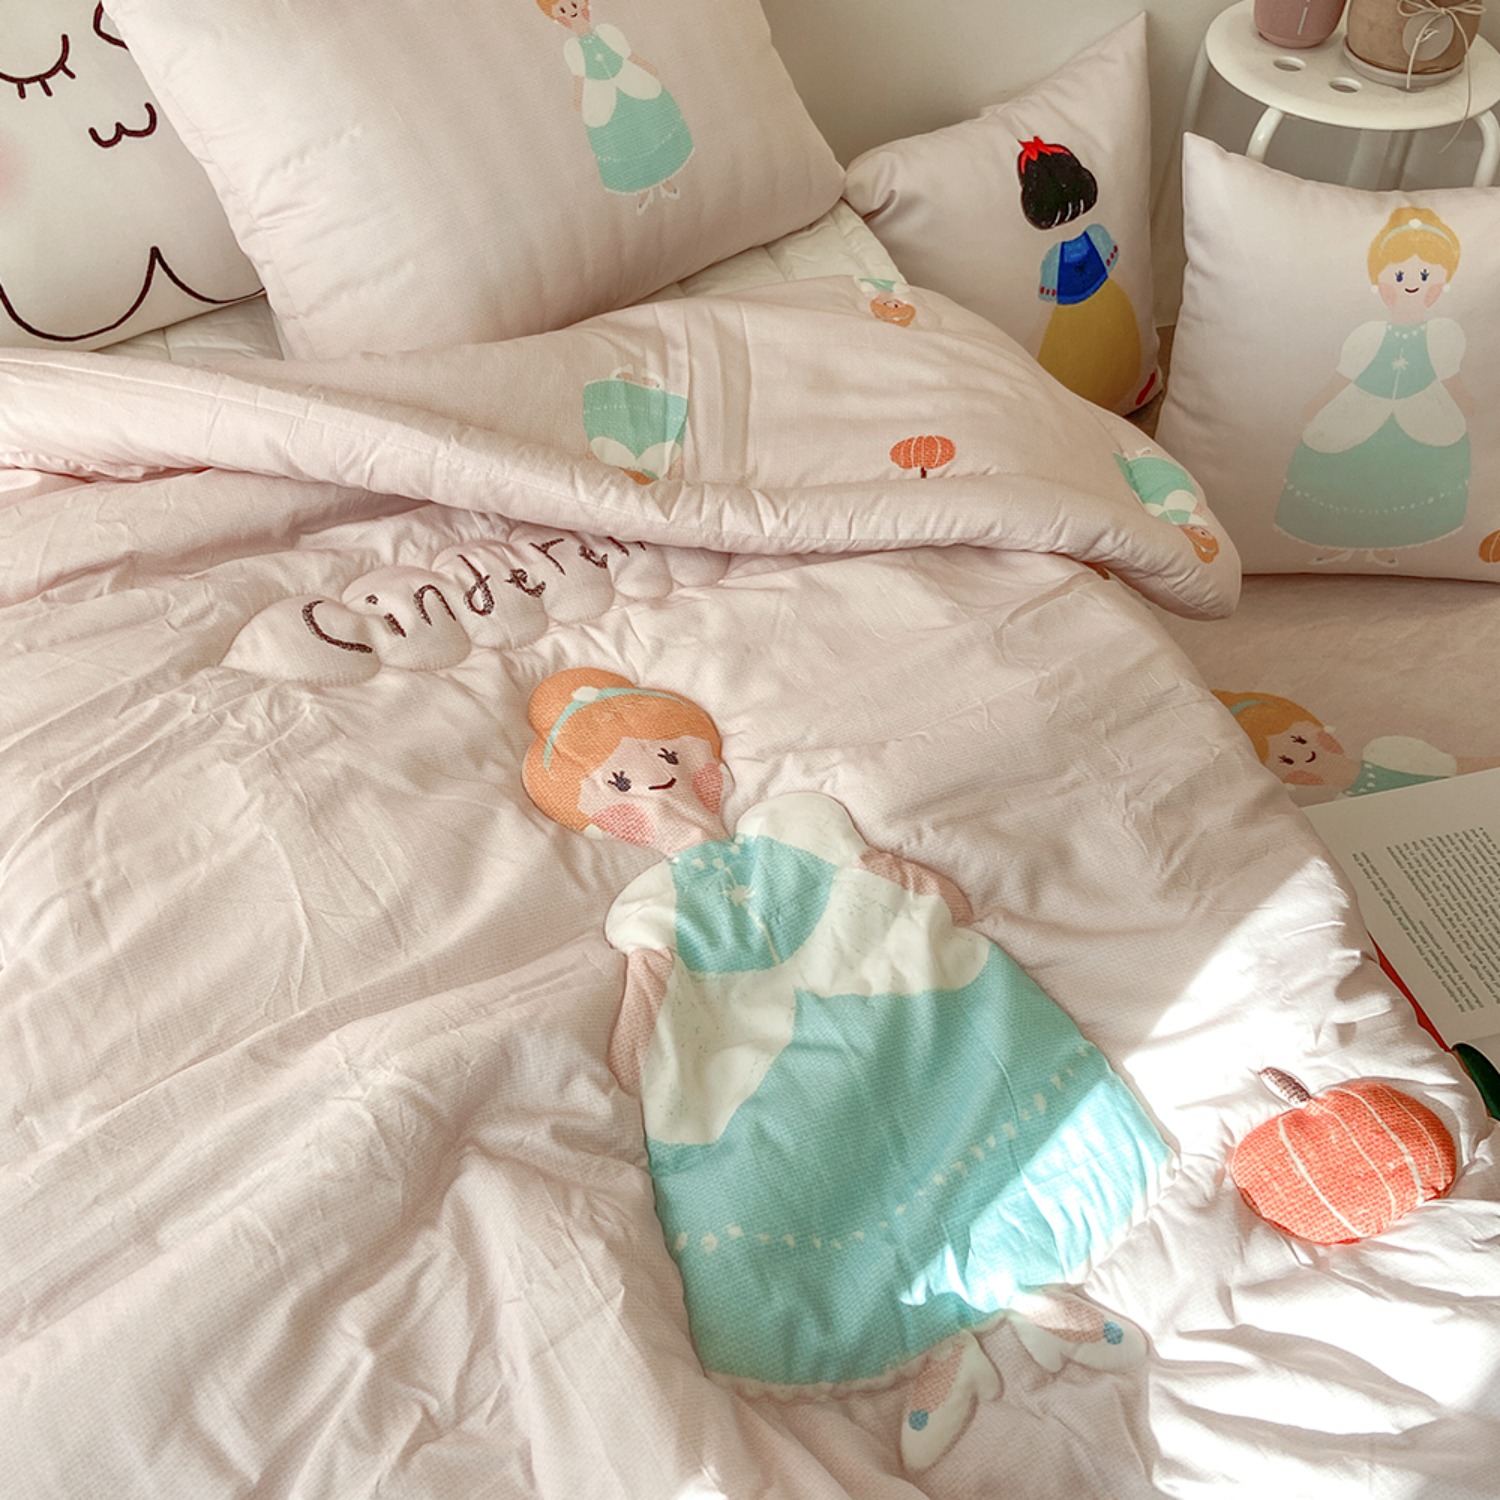 [drawing AMY] Cinderella bed comforter set